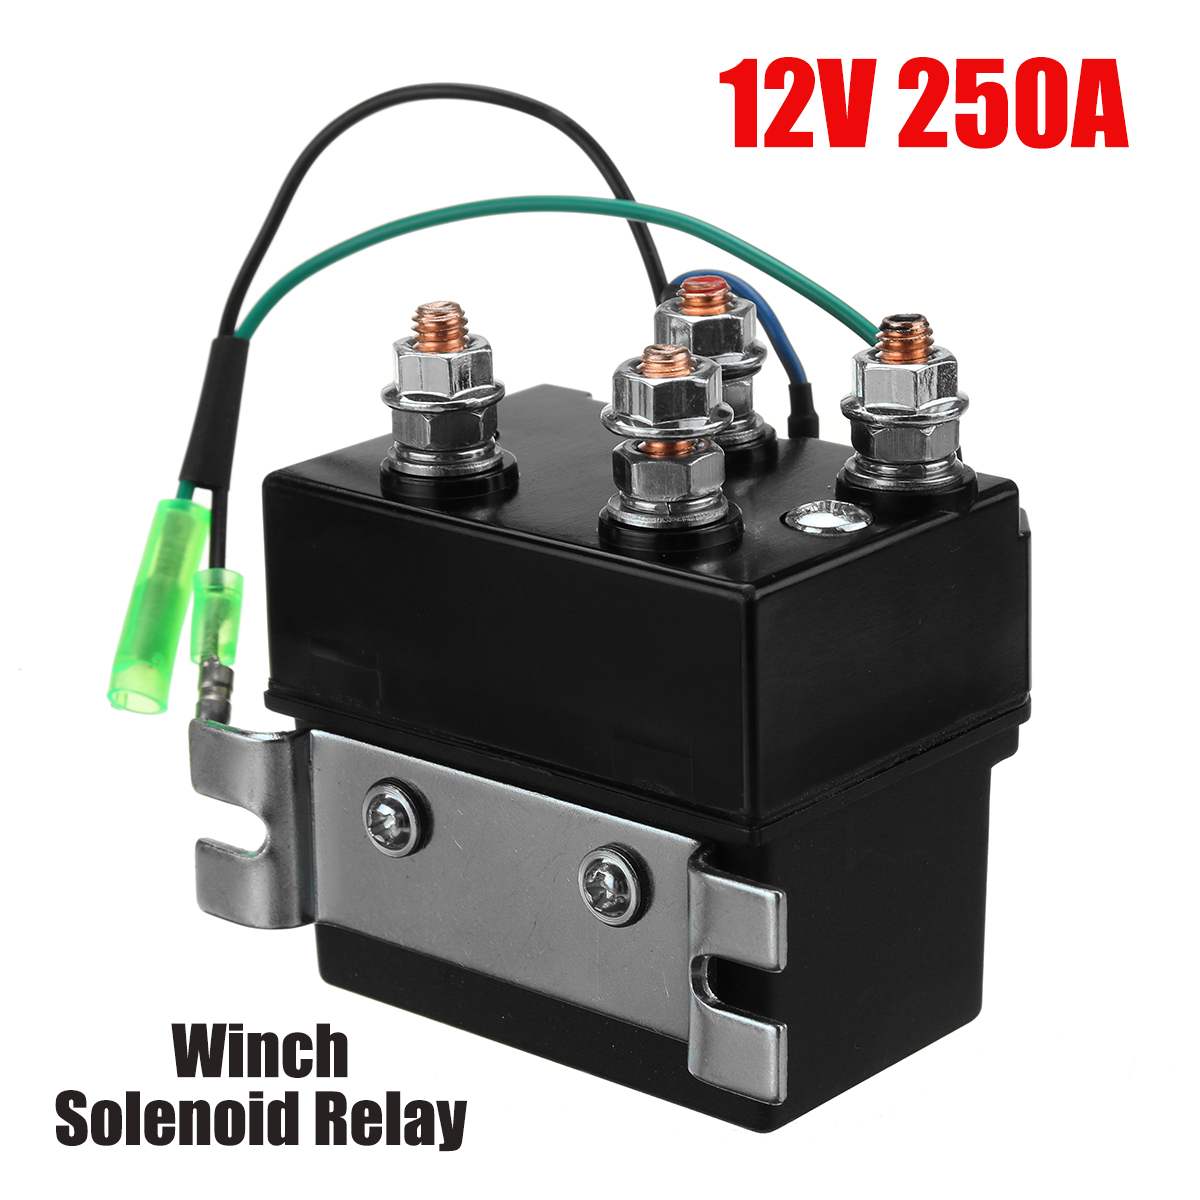 12V 250A Winch Solenoid Relay Contactor Winch Rocker Switch Thumb 2000lb-5000lb For ATV UTV SUV 4x4 Off-road